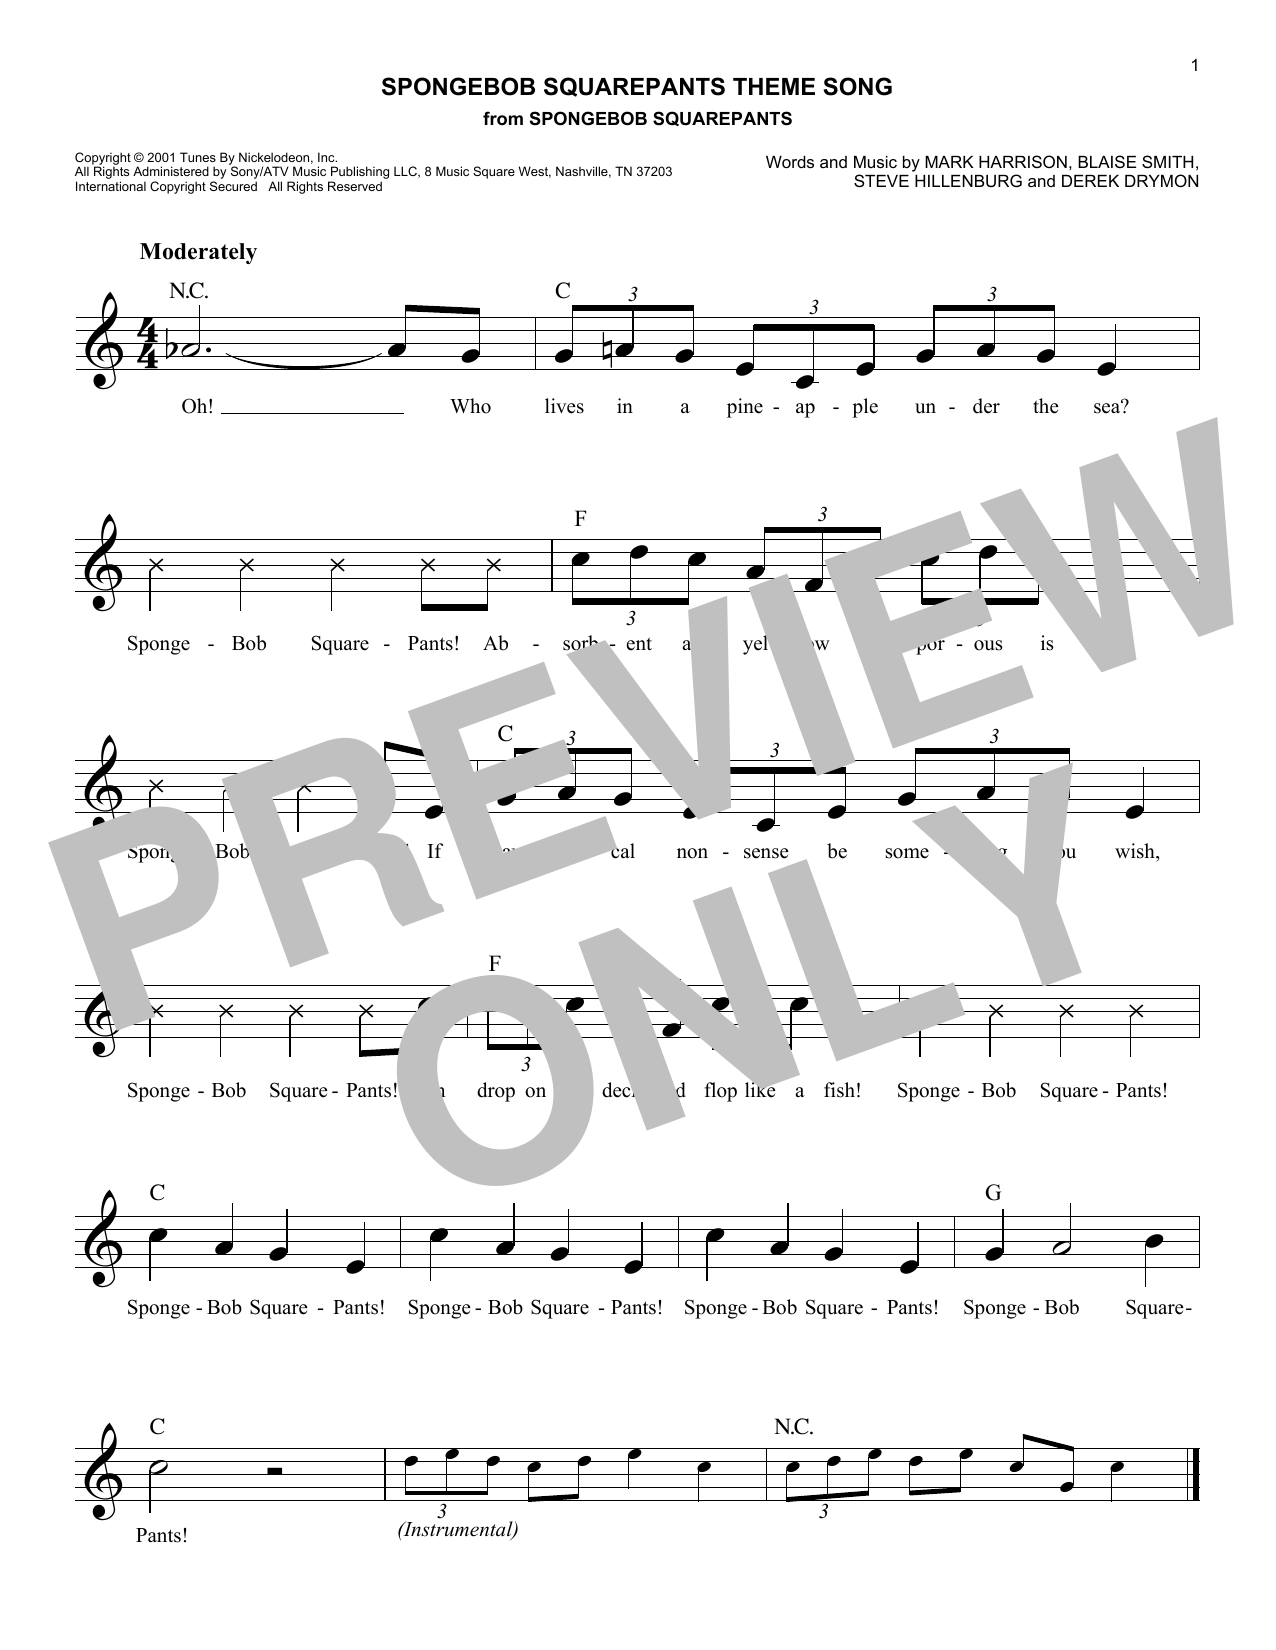 Steve Hillenburg SpongeBob SquarePants Theme Song Sheet Music Notes & Chords for 5-Finger Piano - Download or Print PDF